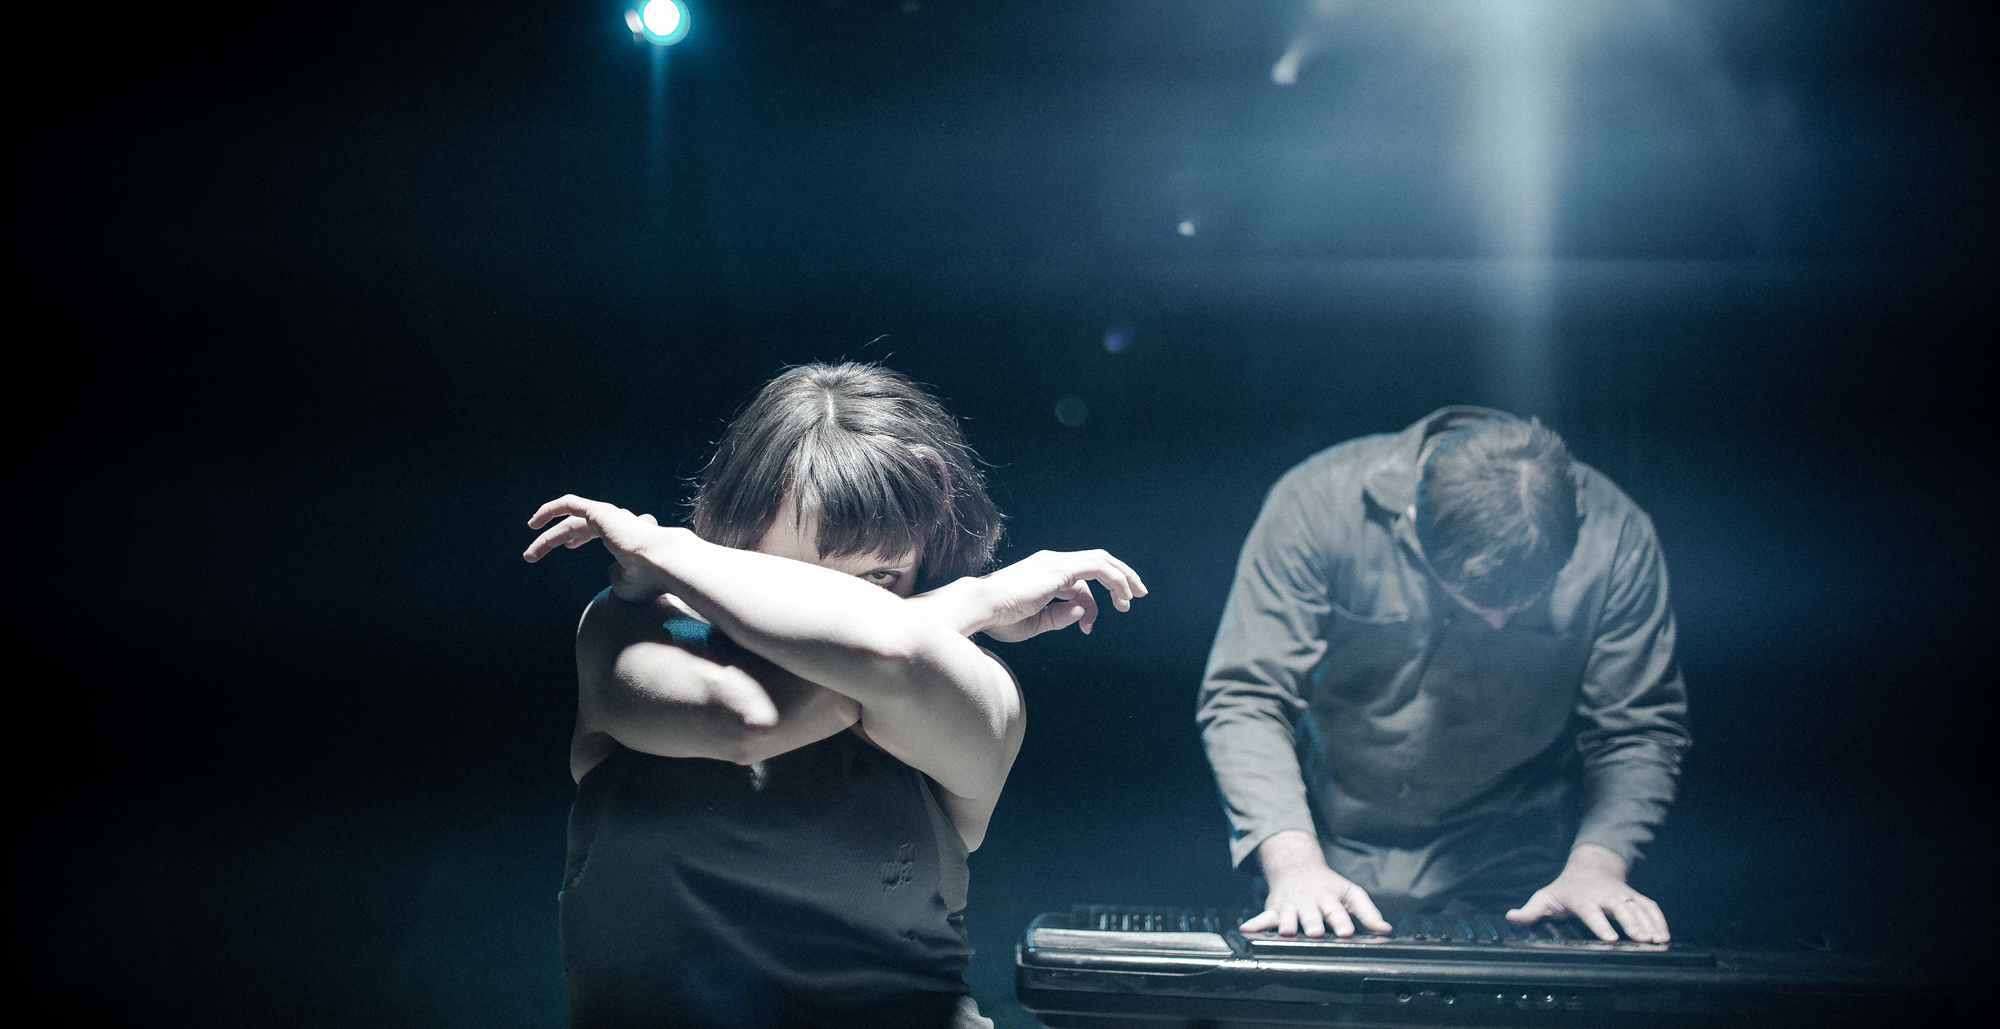 Woman crosses arms in face man plays keyboards in dark room.